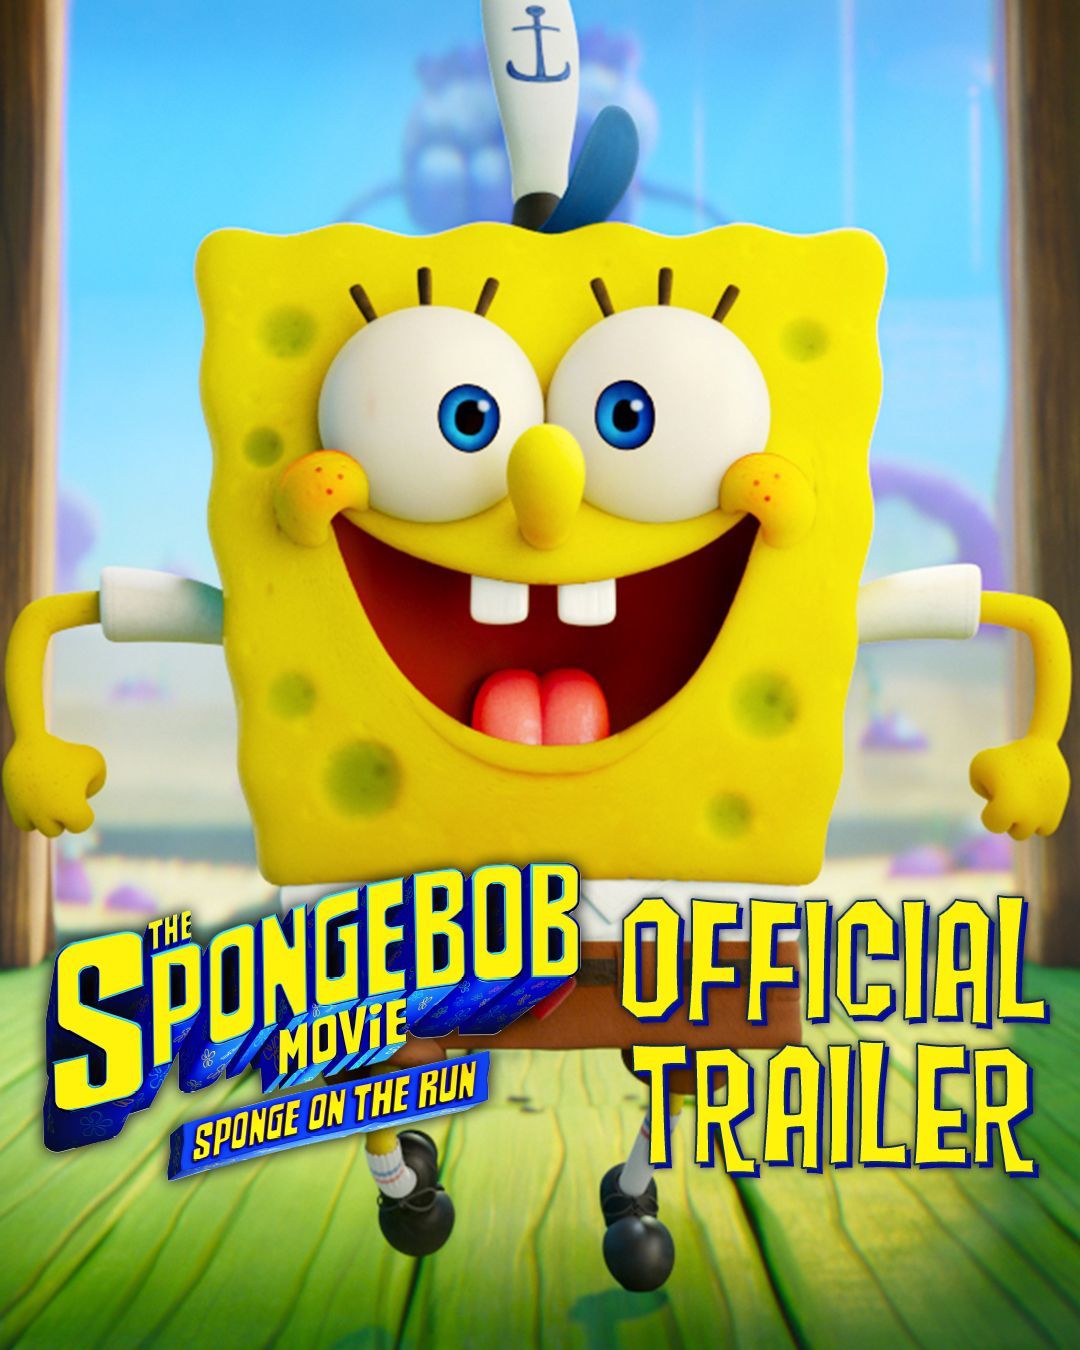 The Sponge on the Run